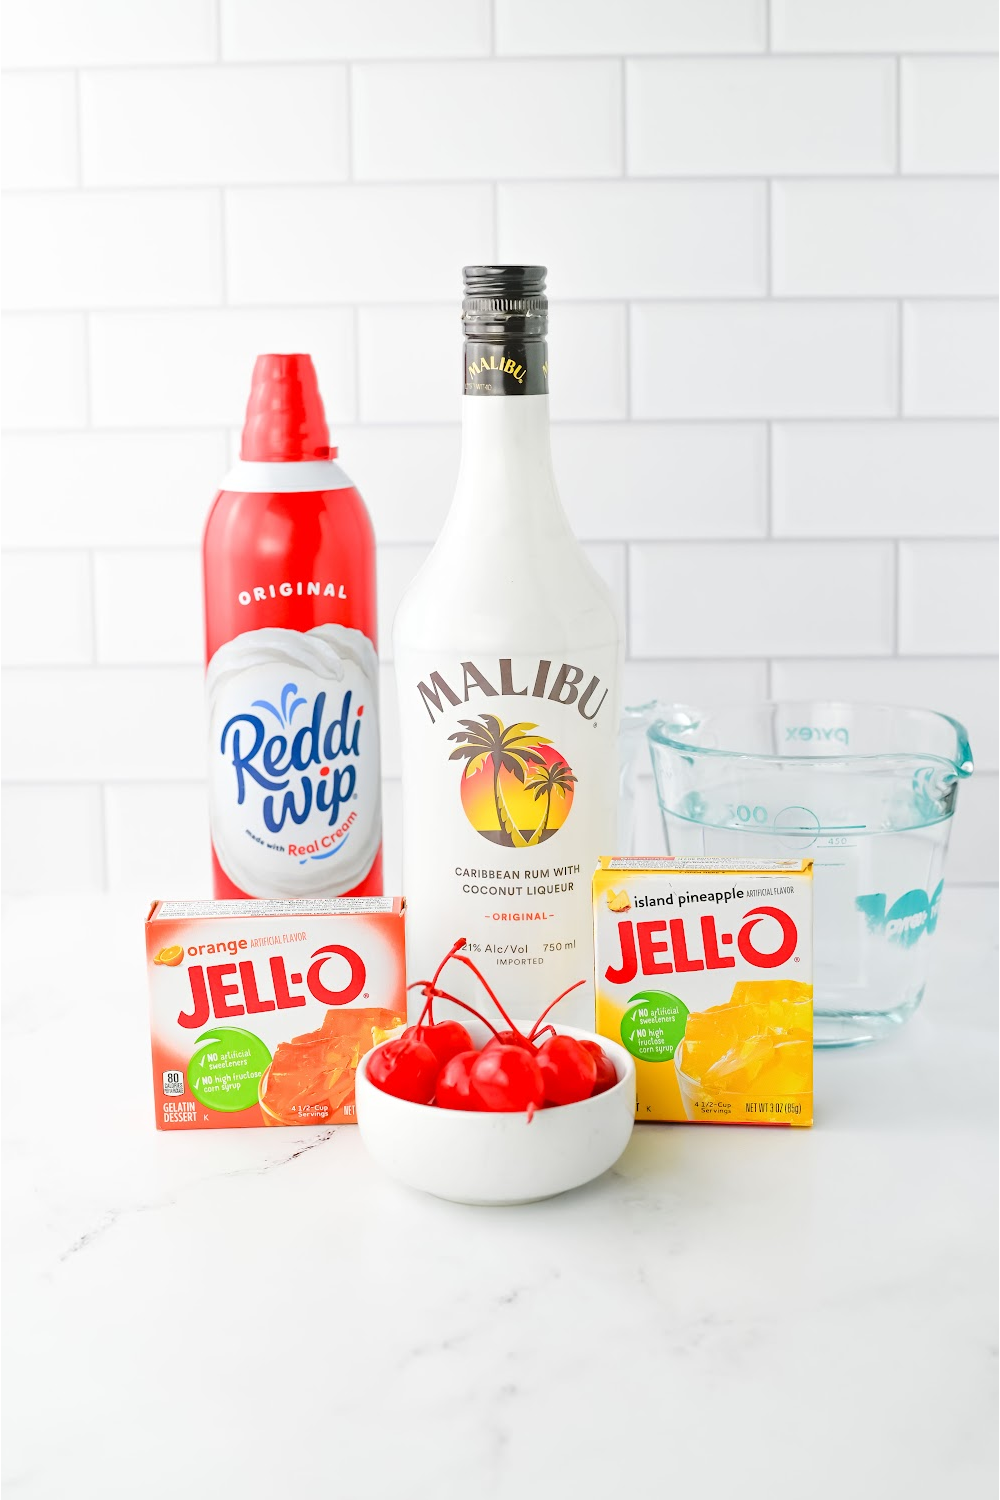 Bahama Mama jello shots ingredients including coconut rum, jello, whipped cream.